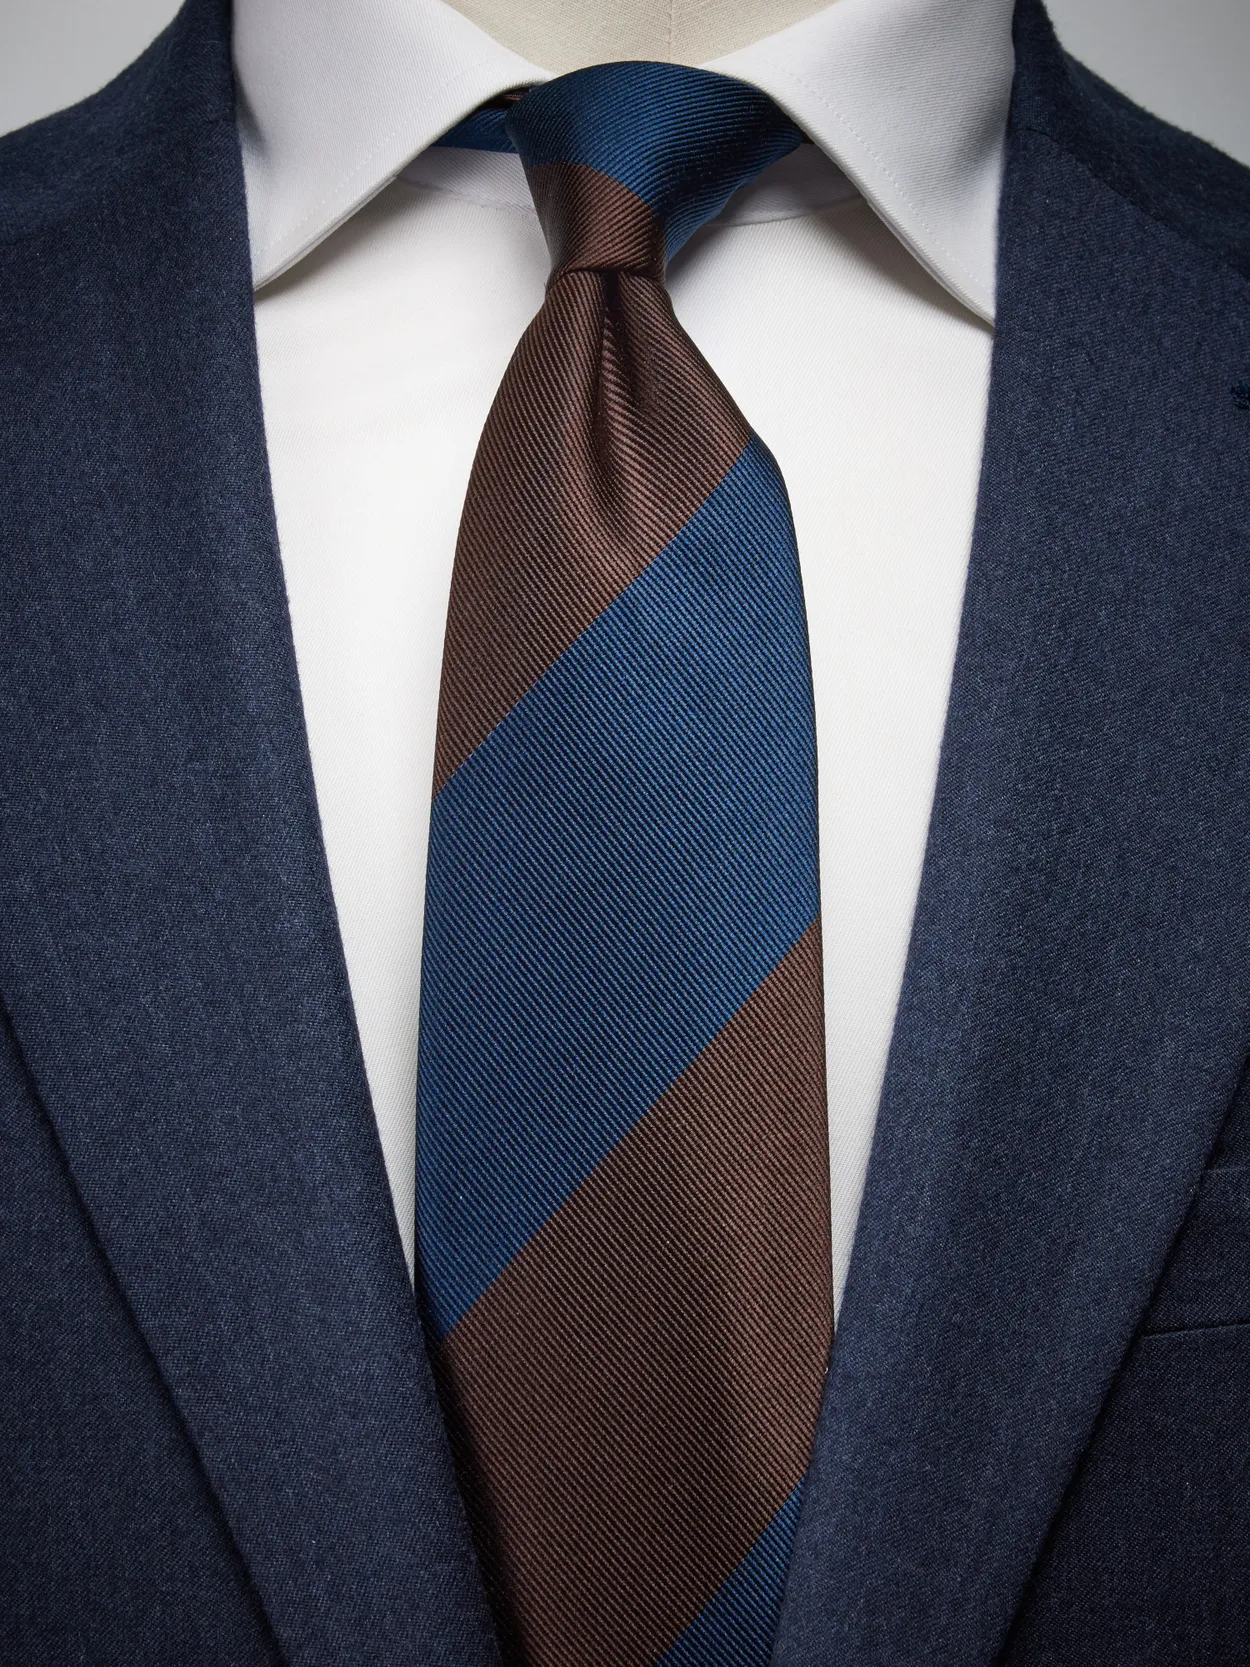 Blue & Brown Tie Stripe